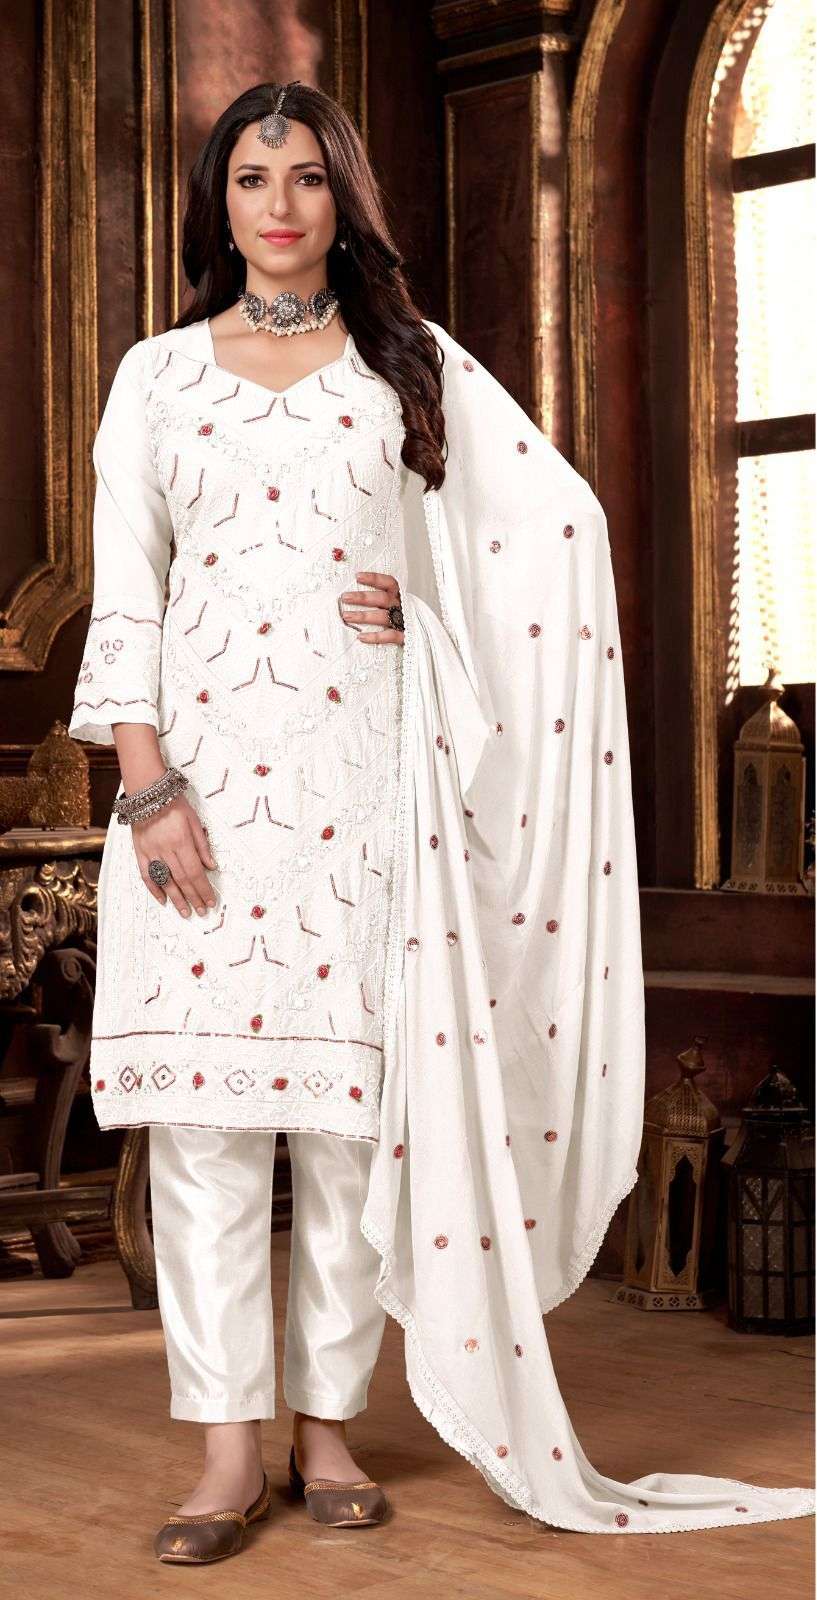 serine 143 series fancy look designer pakistani salwar suits in surat